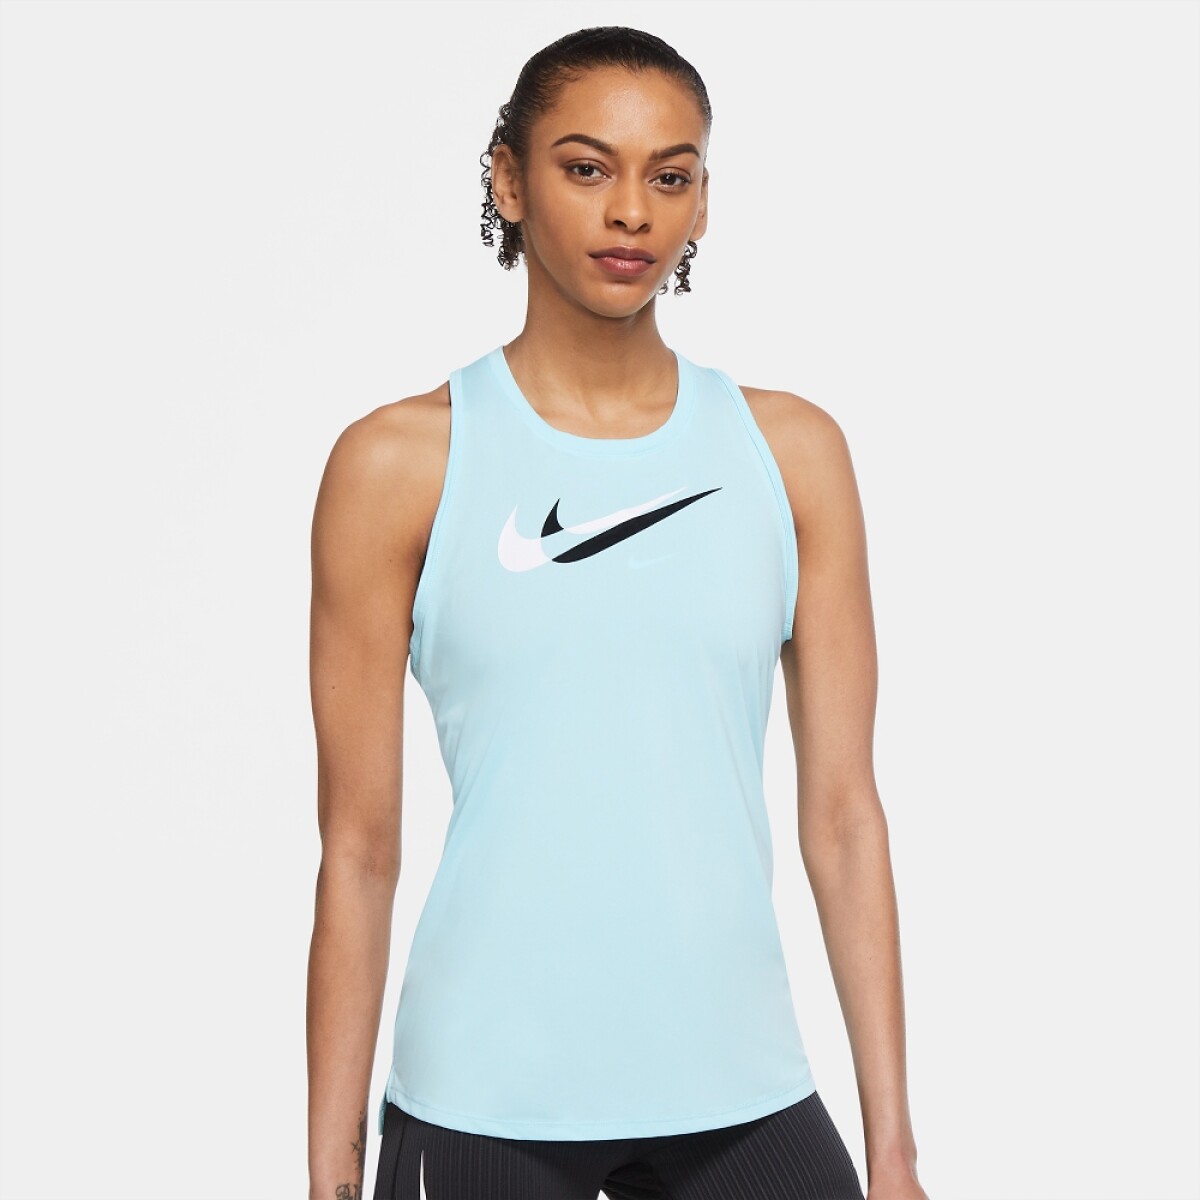 Musculosa Nike Running Dama Swsh - Color Único 